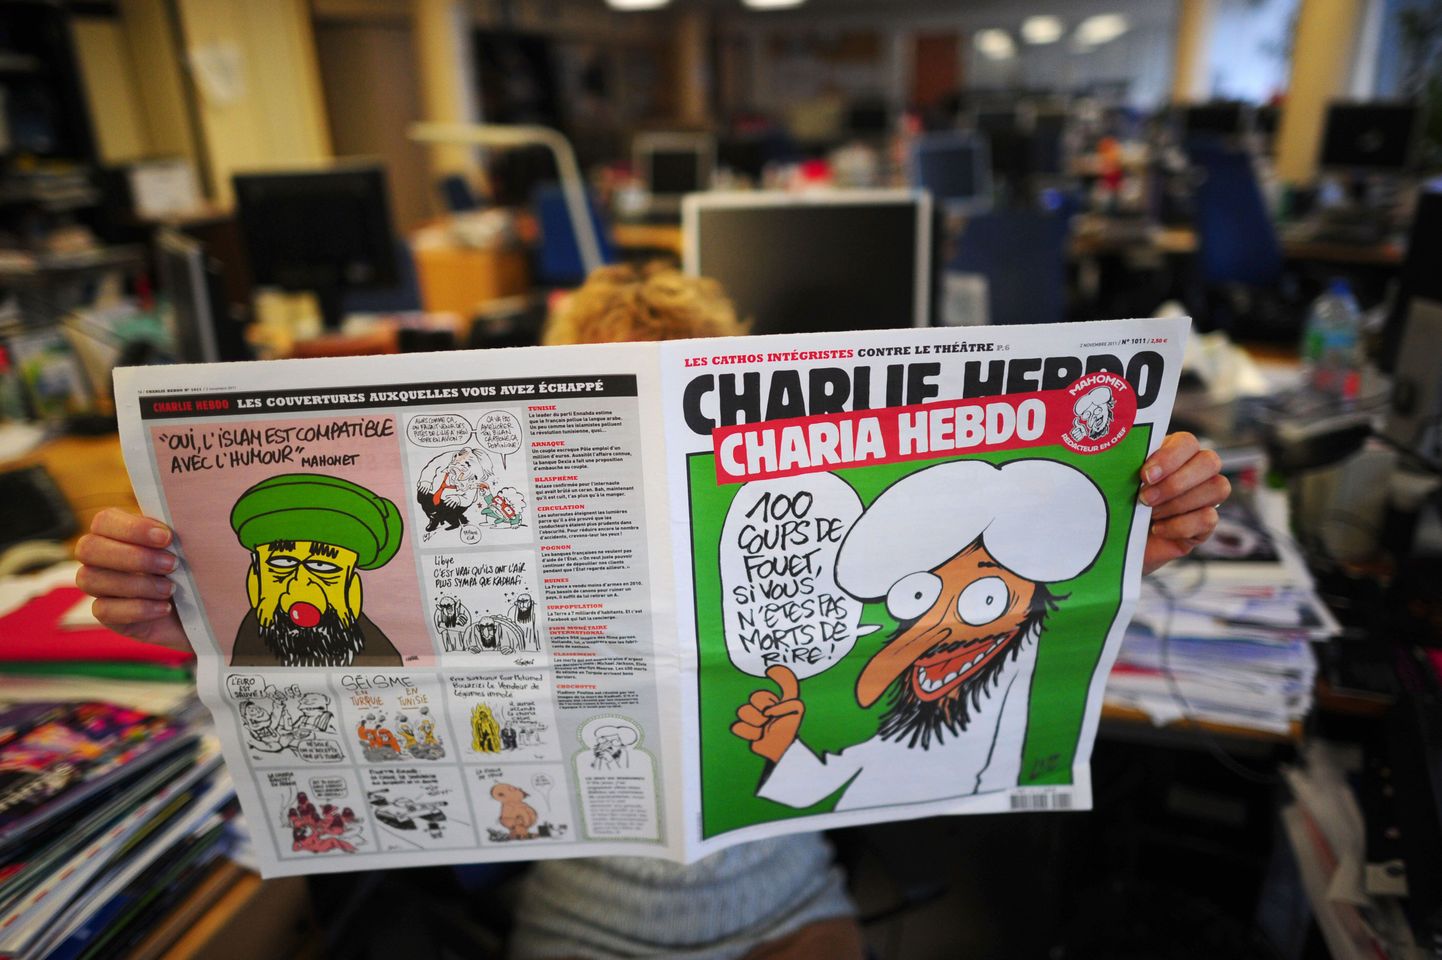 Satiiriline nädalaleht Charlie Hebdo